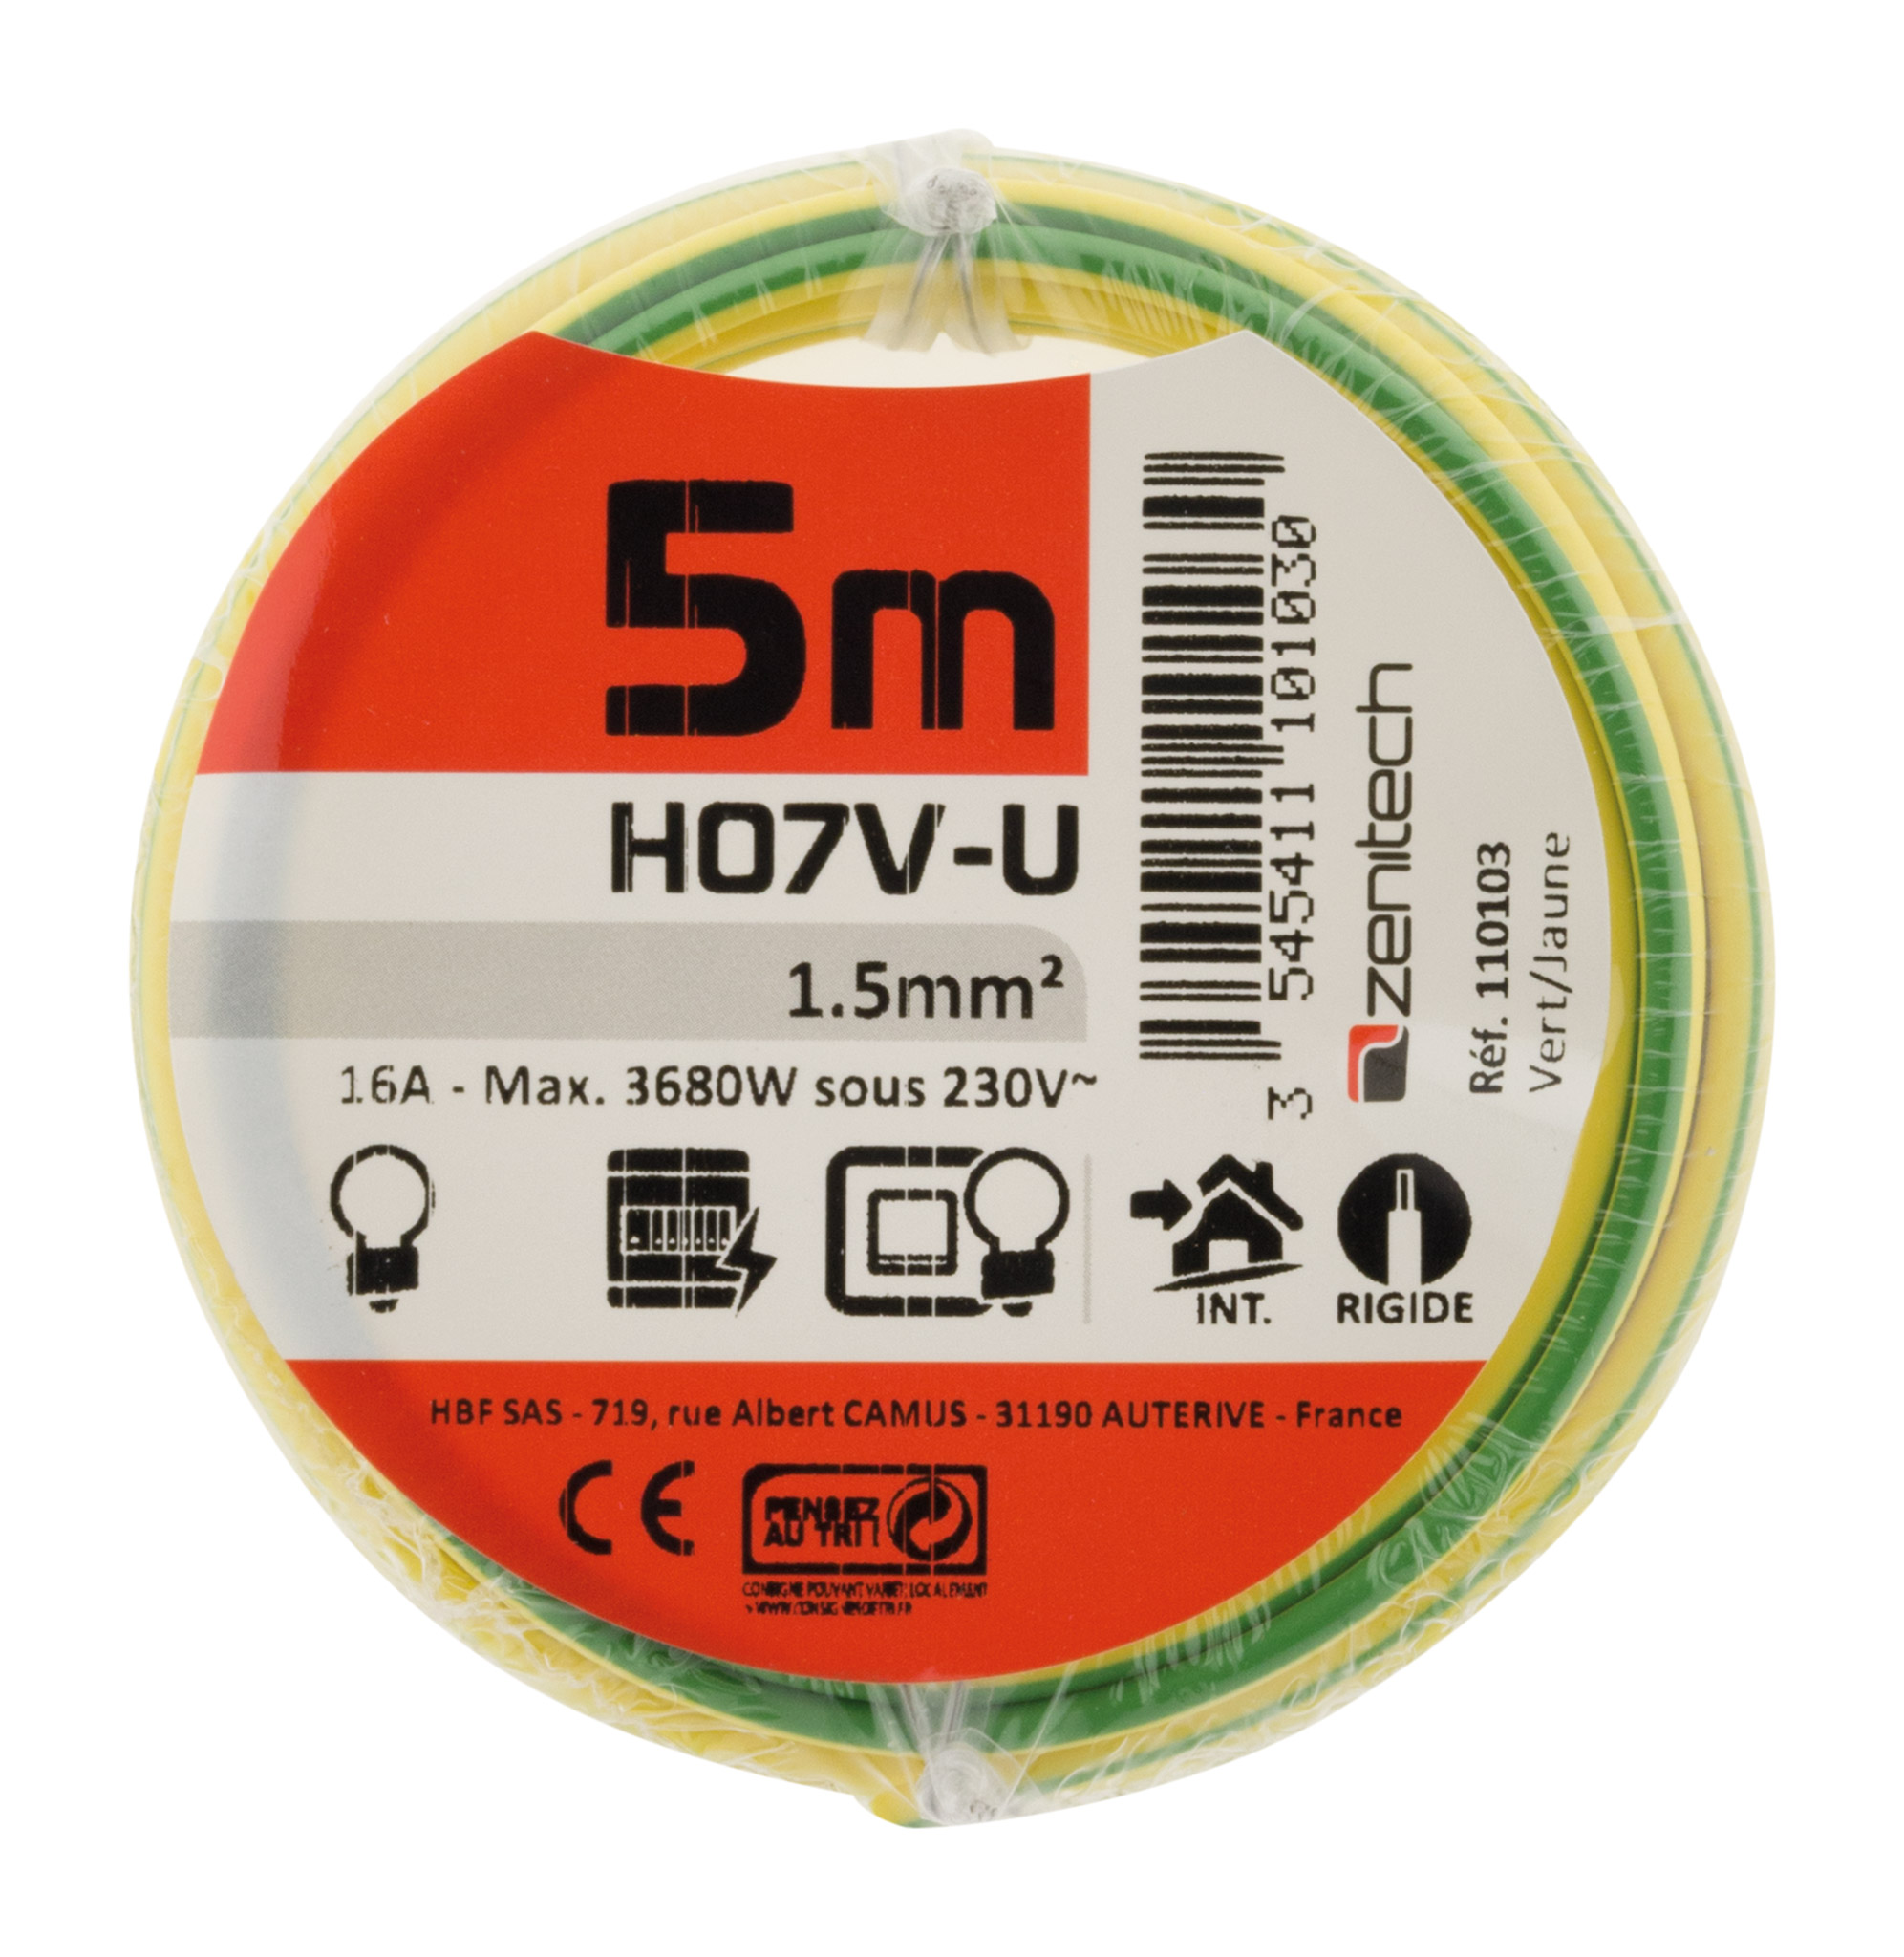 Cable ho7vu 1.5 vert/jaune 5m - PLASTO